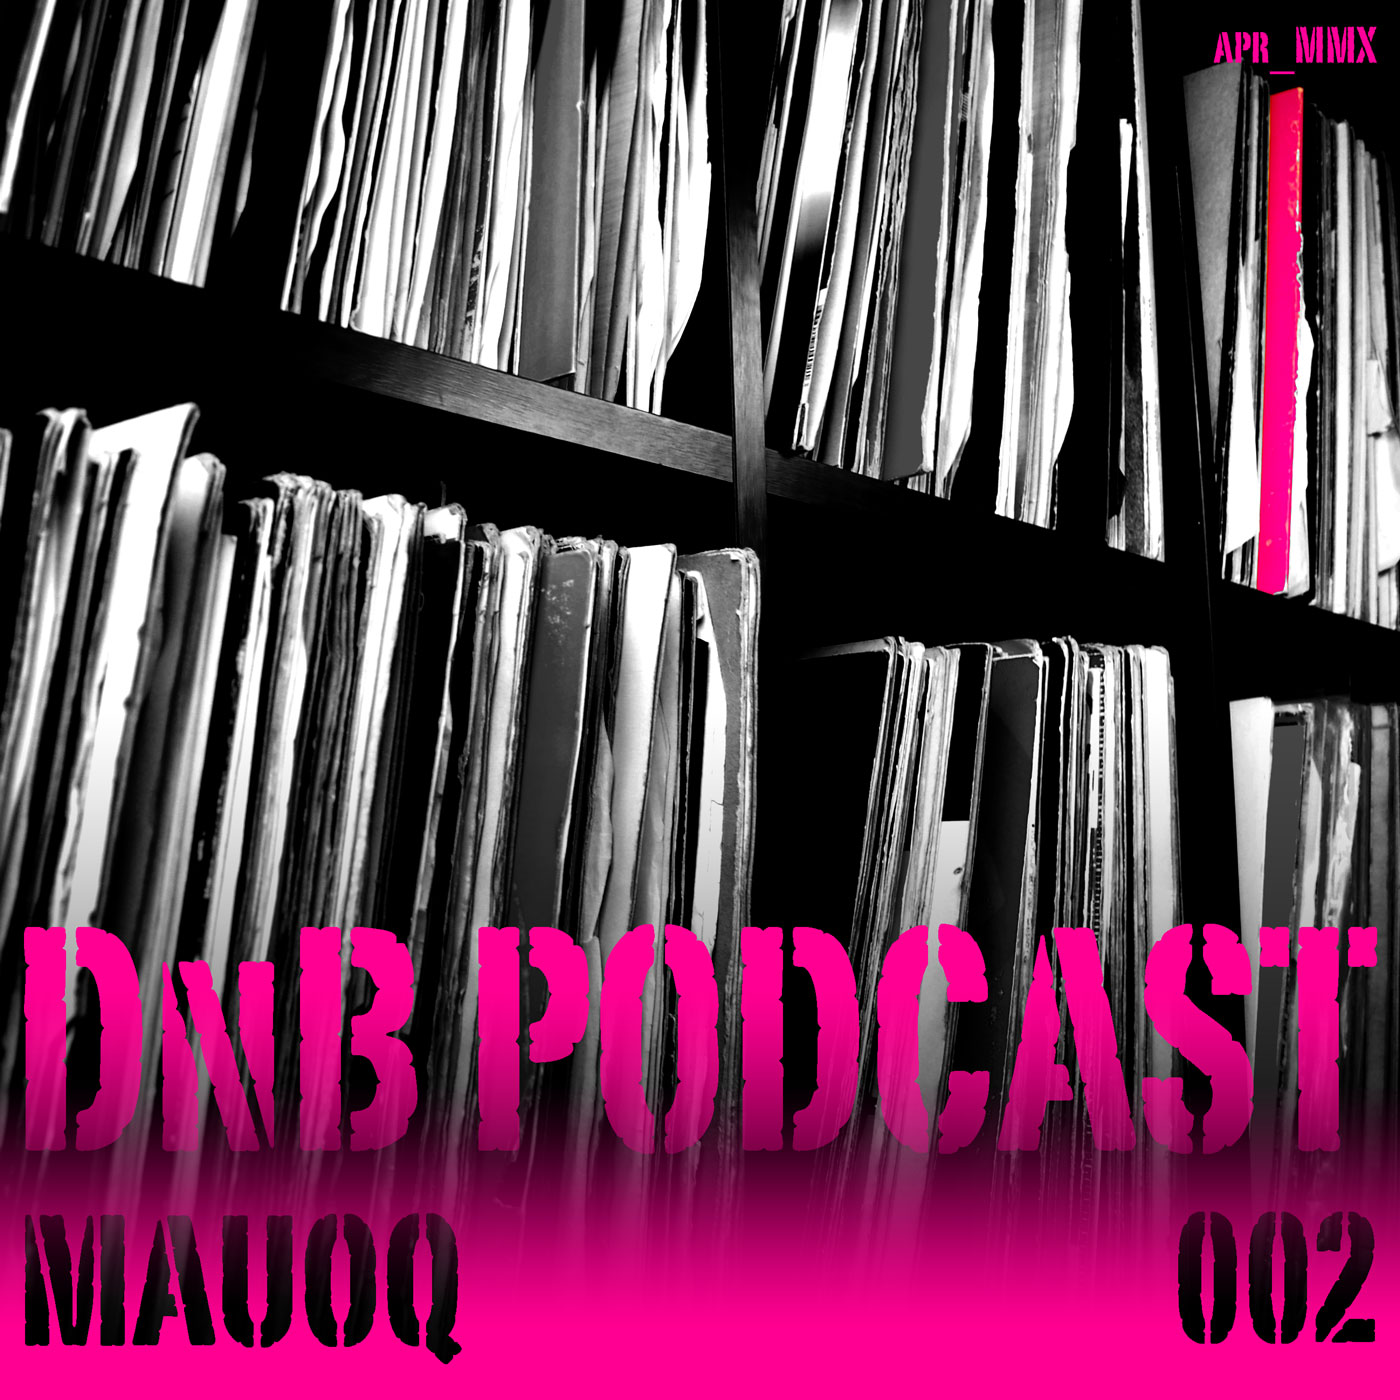 Mauoq DnB Podcast 002 Artwork